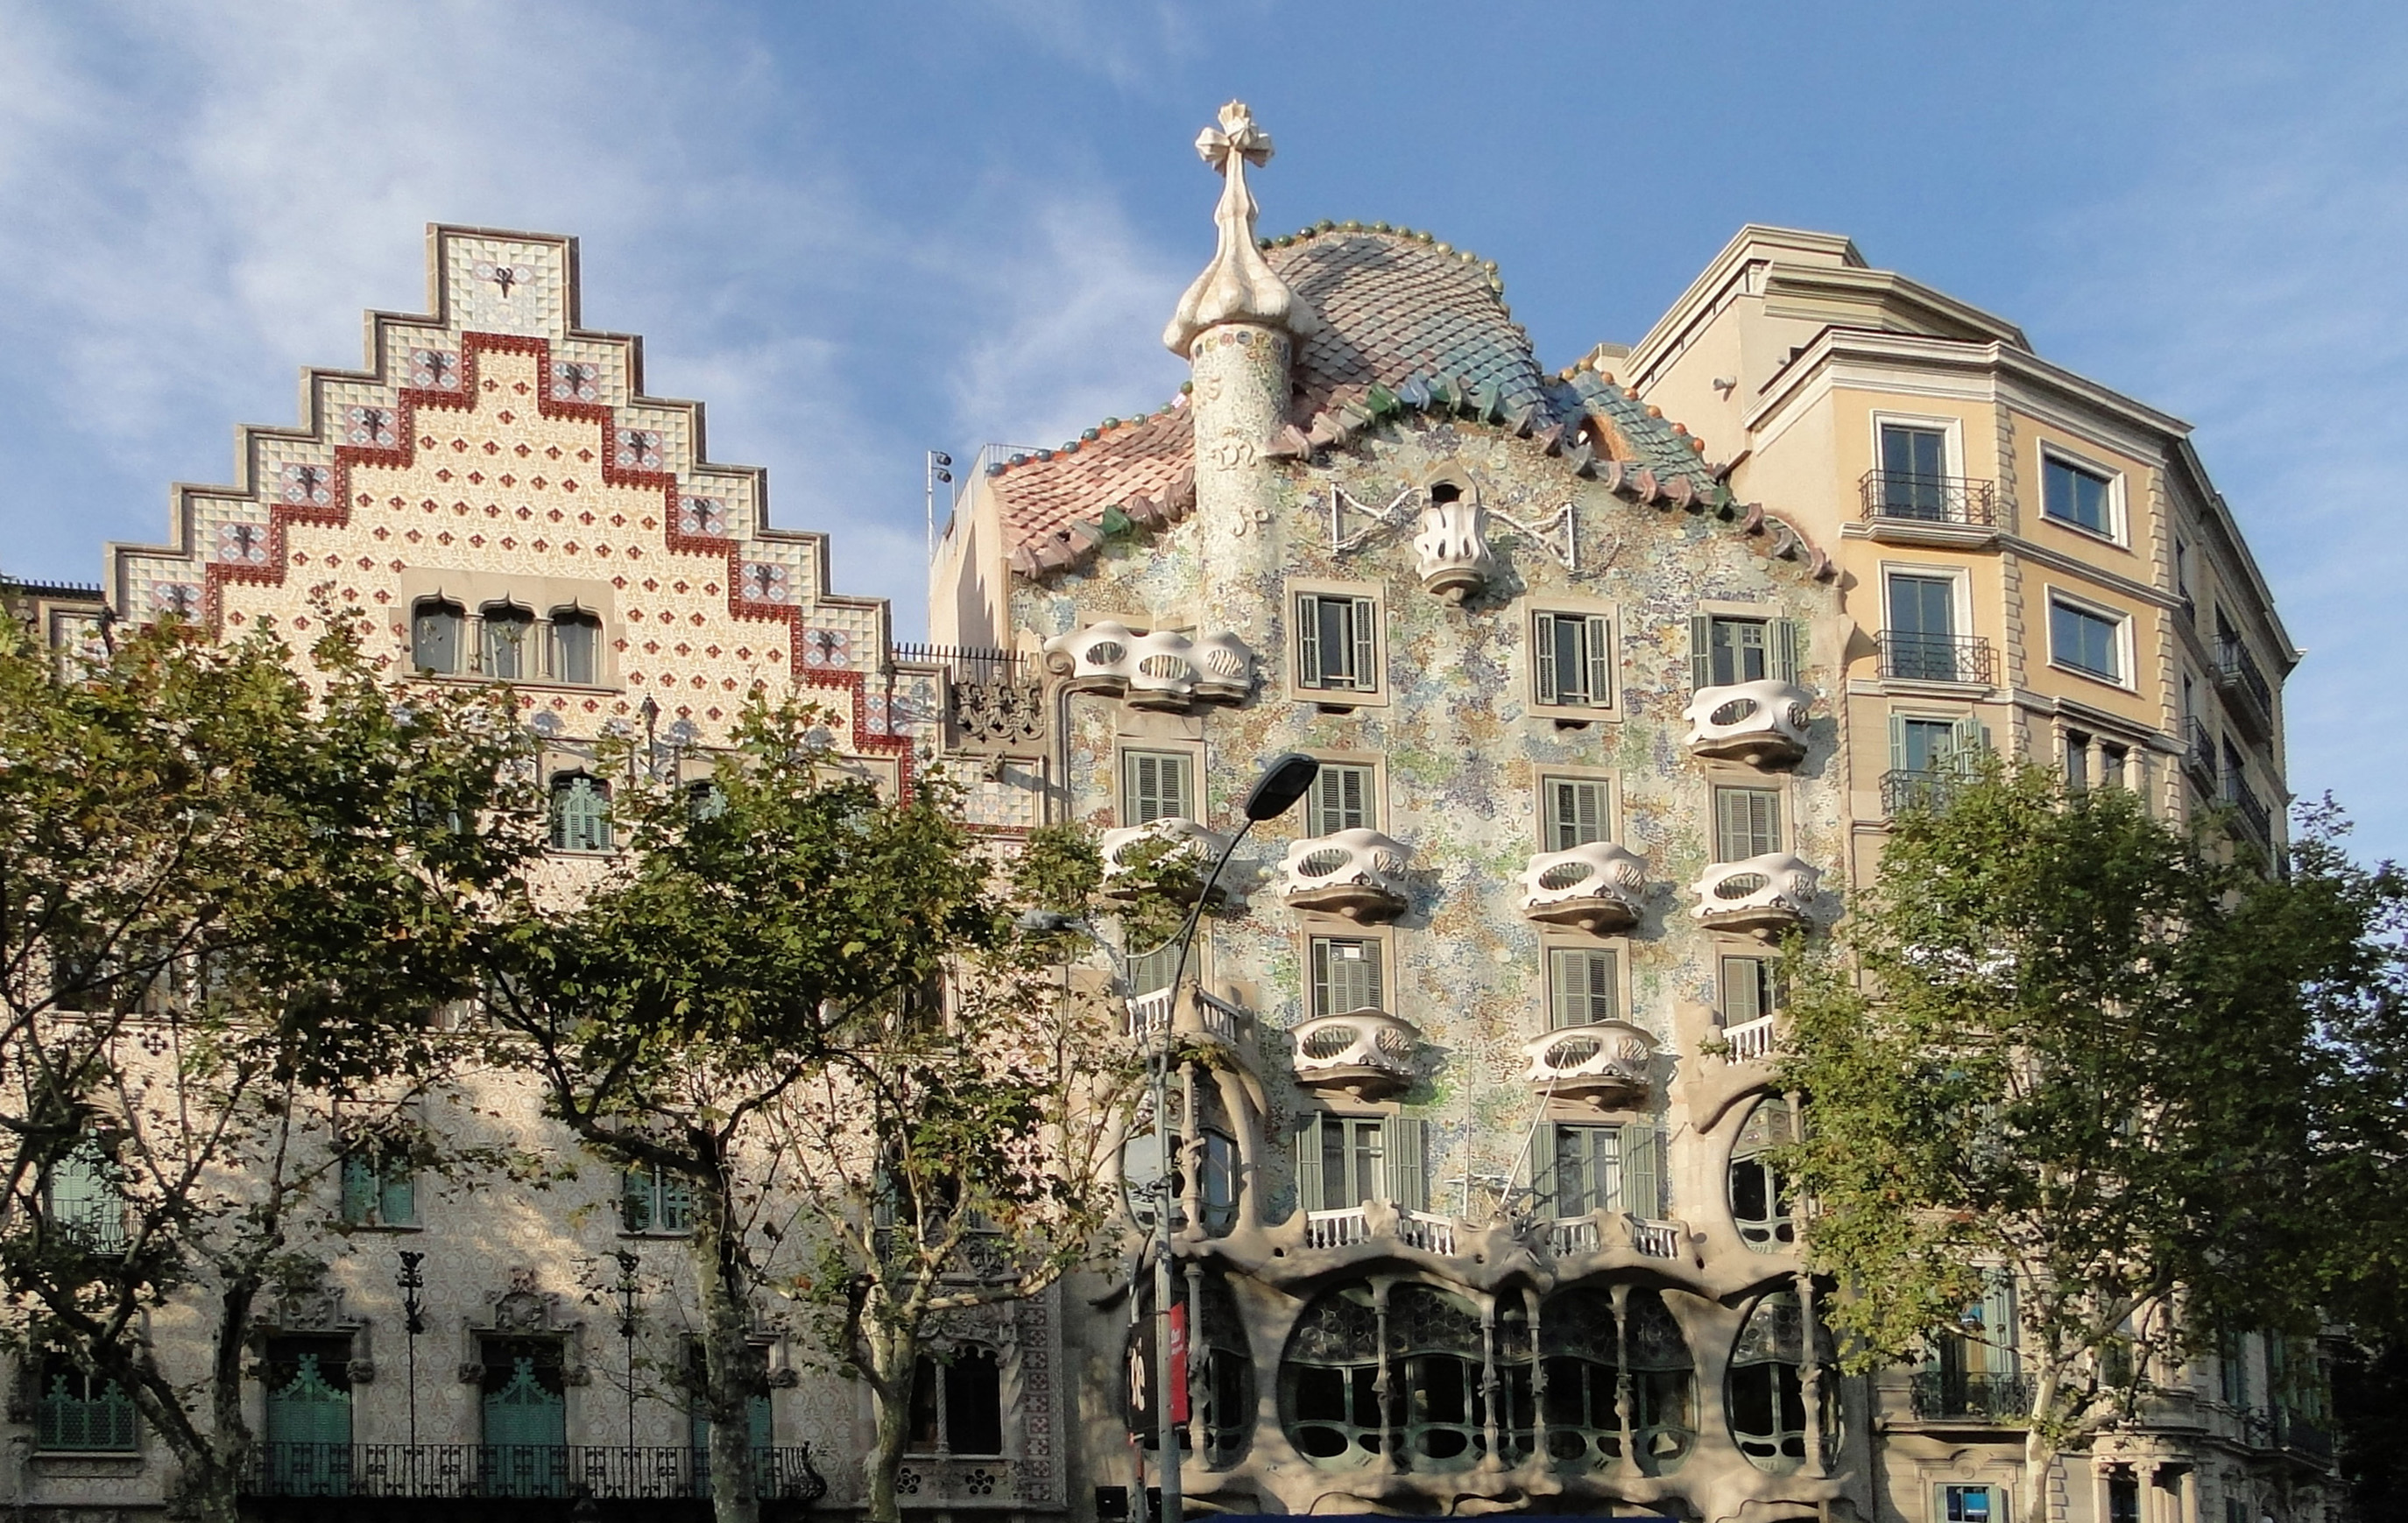 Top 3 walking streets of Barcelona